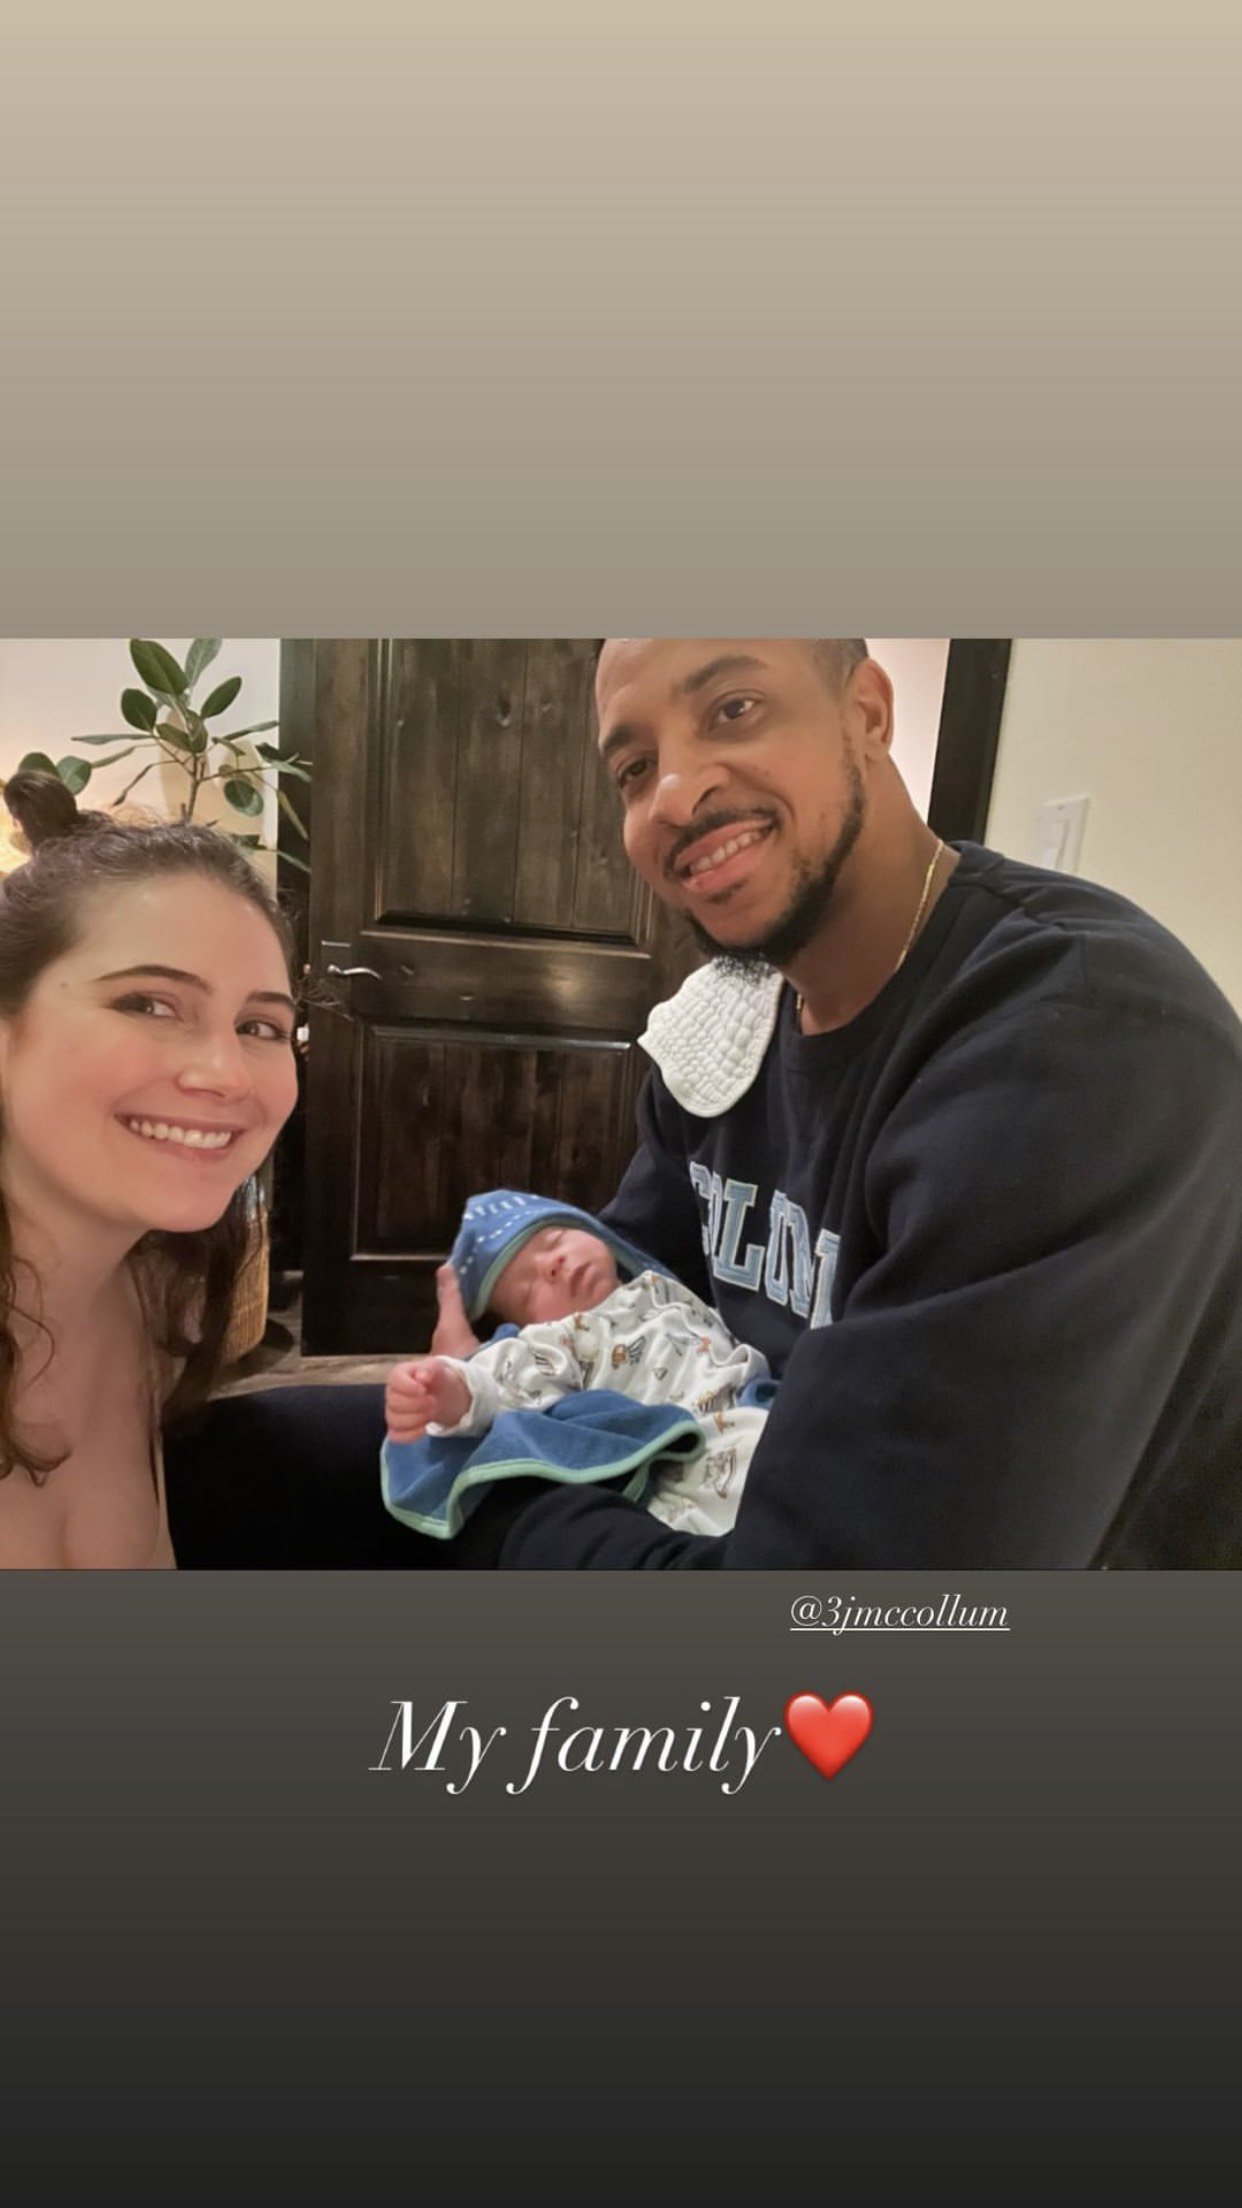 Elise Esposito, CJ McCollum and their son | Source: https://www.instagram.com/elisespo/